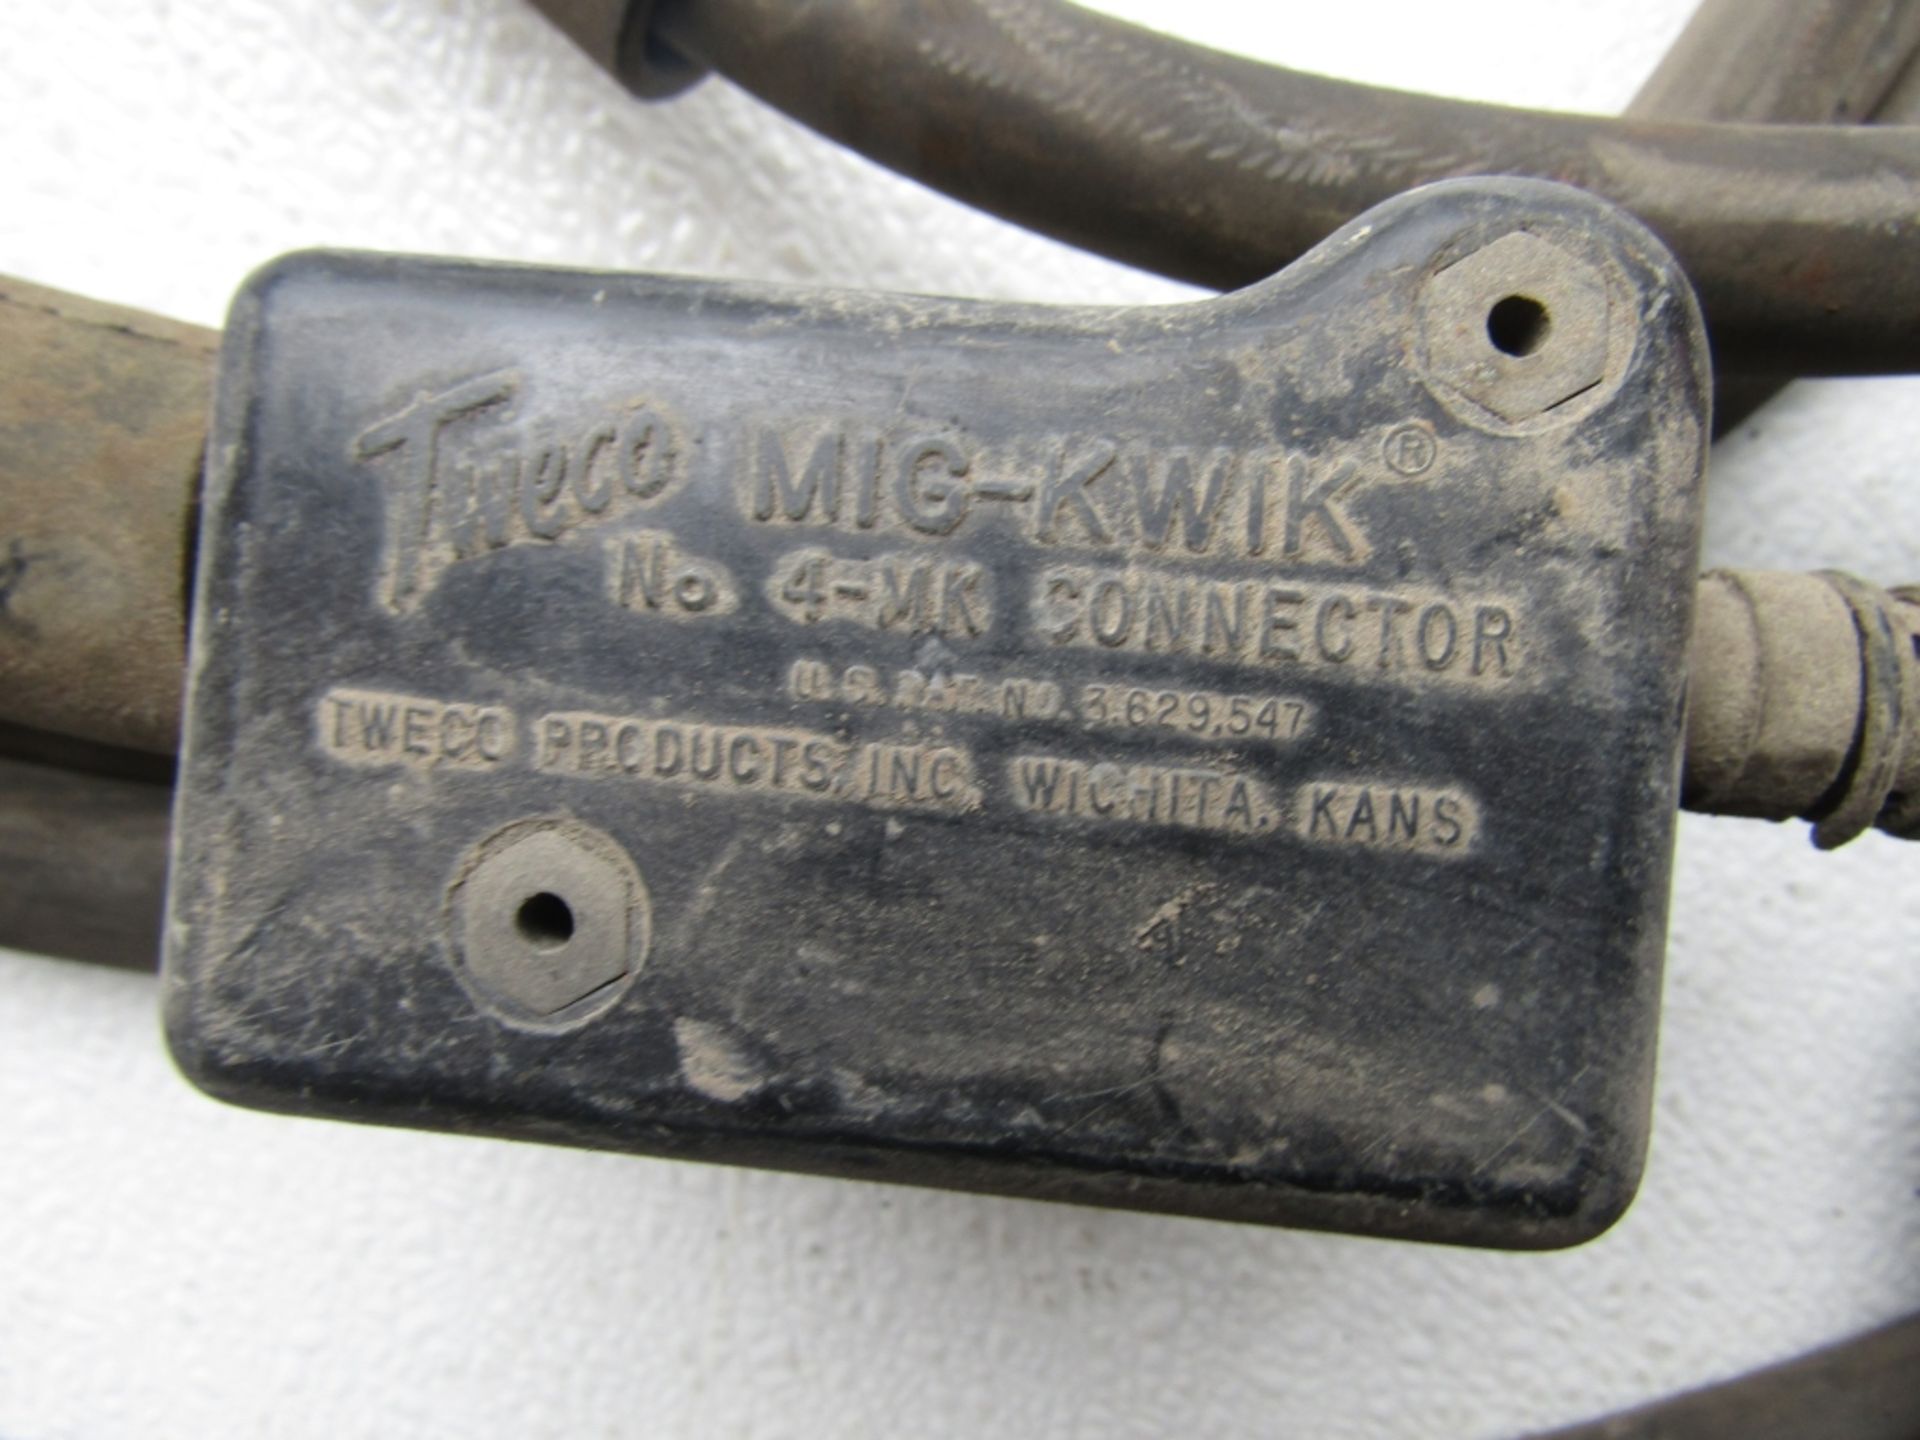 Tweco Mig-Kwik Connector hose - Image 2 of 2